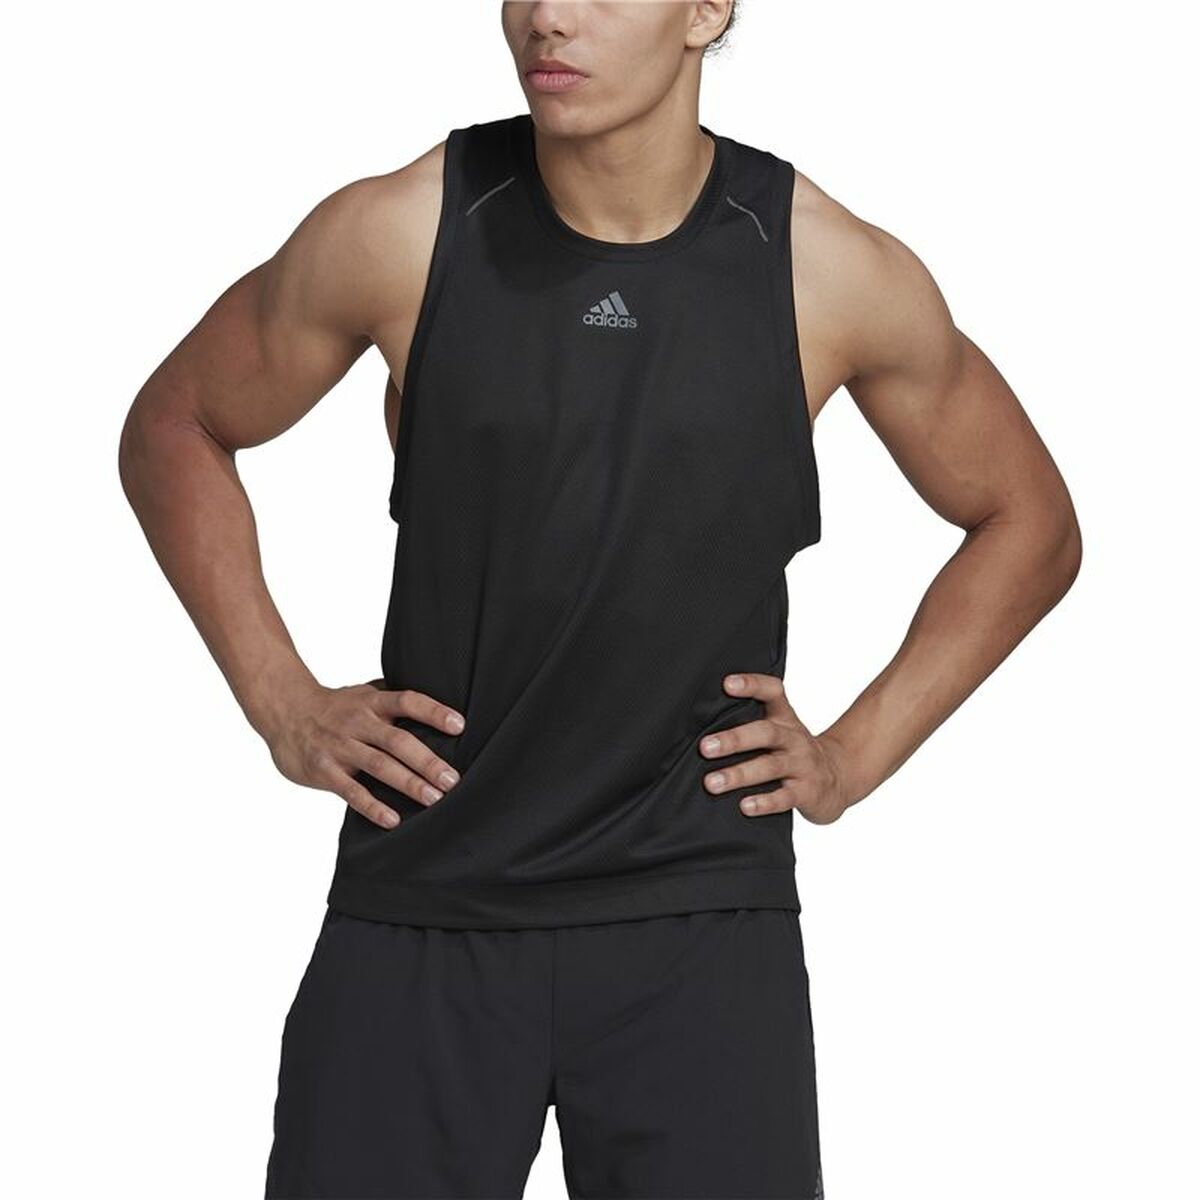 Men's Sleeveless T-shirt Adidas HIIT Spin Training Black